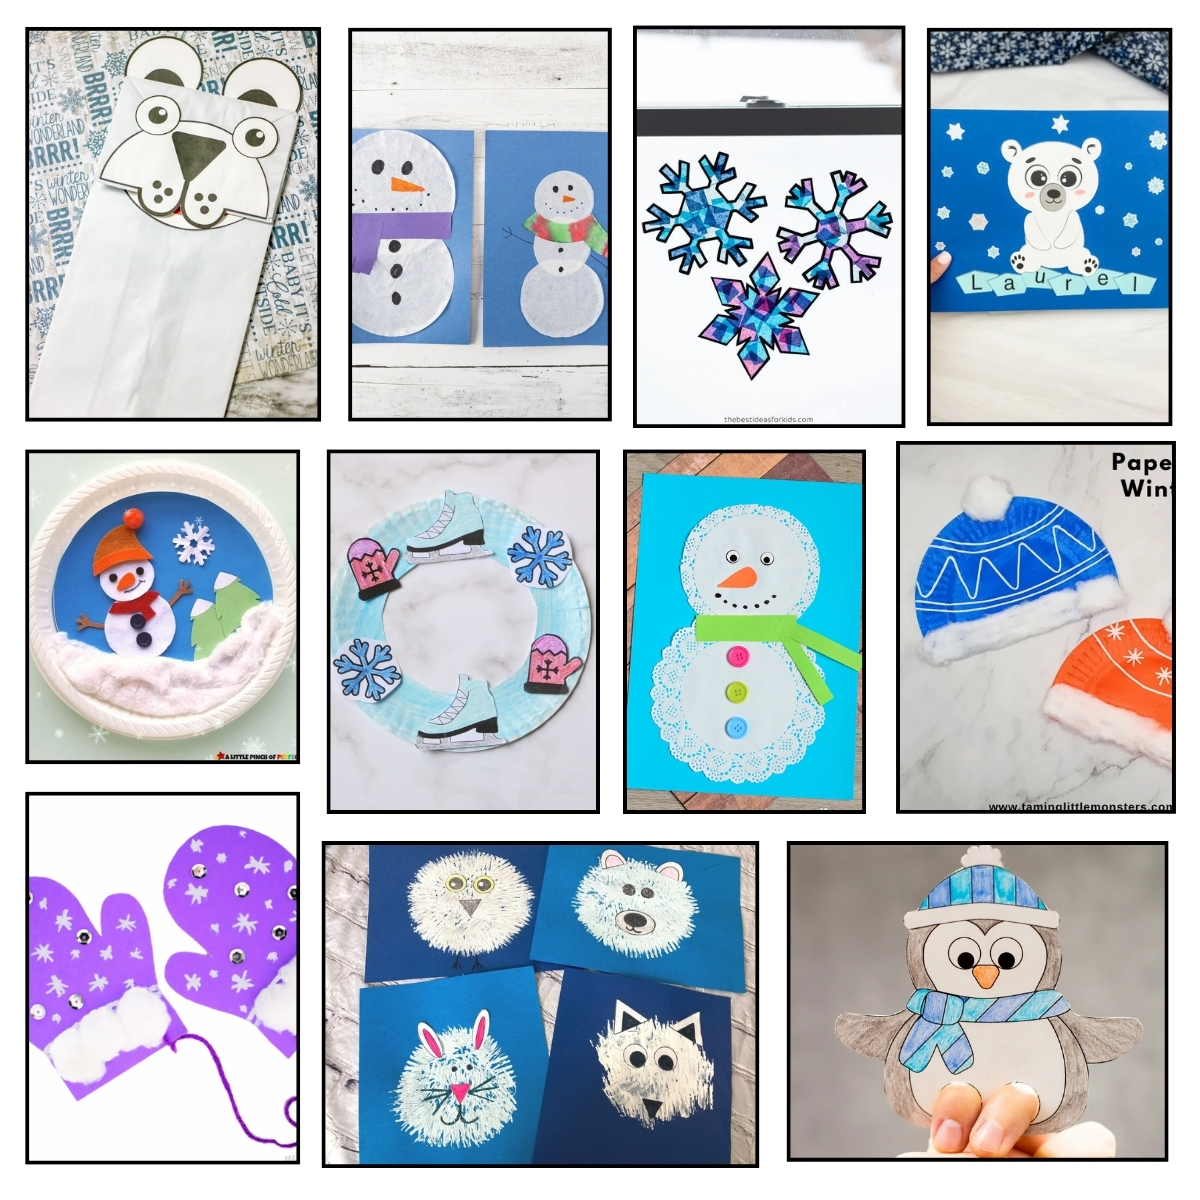  Winlyn 24 Sets Christmas Craft Kits Winter Crafts DIY